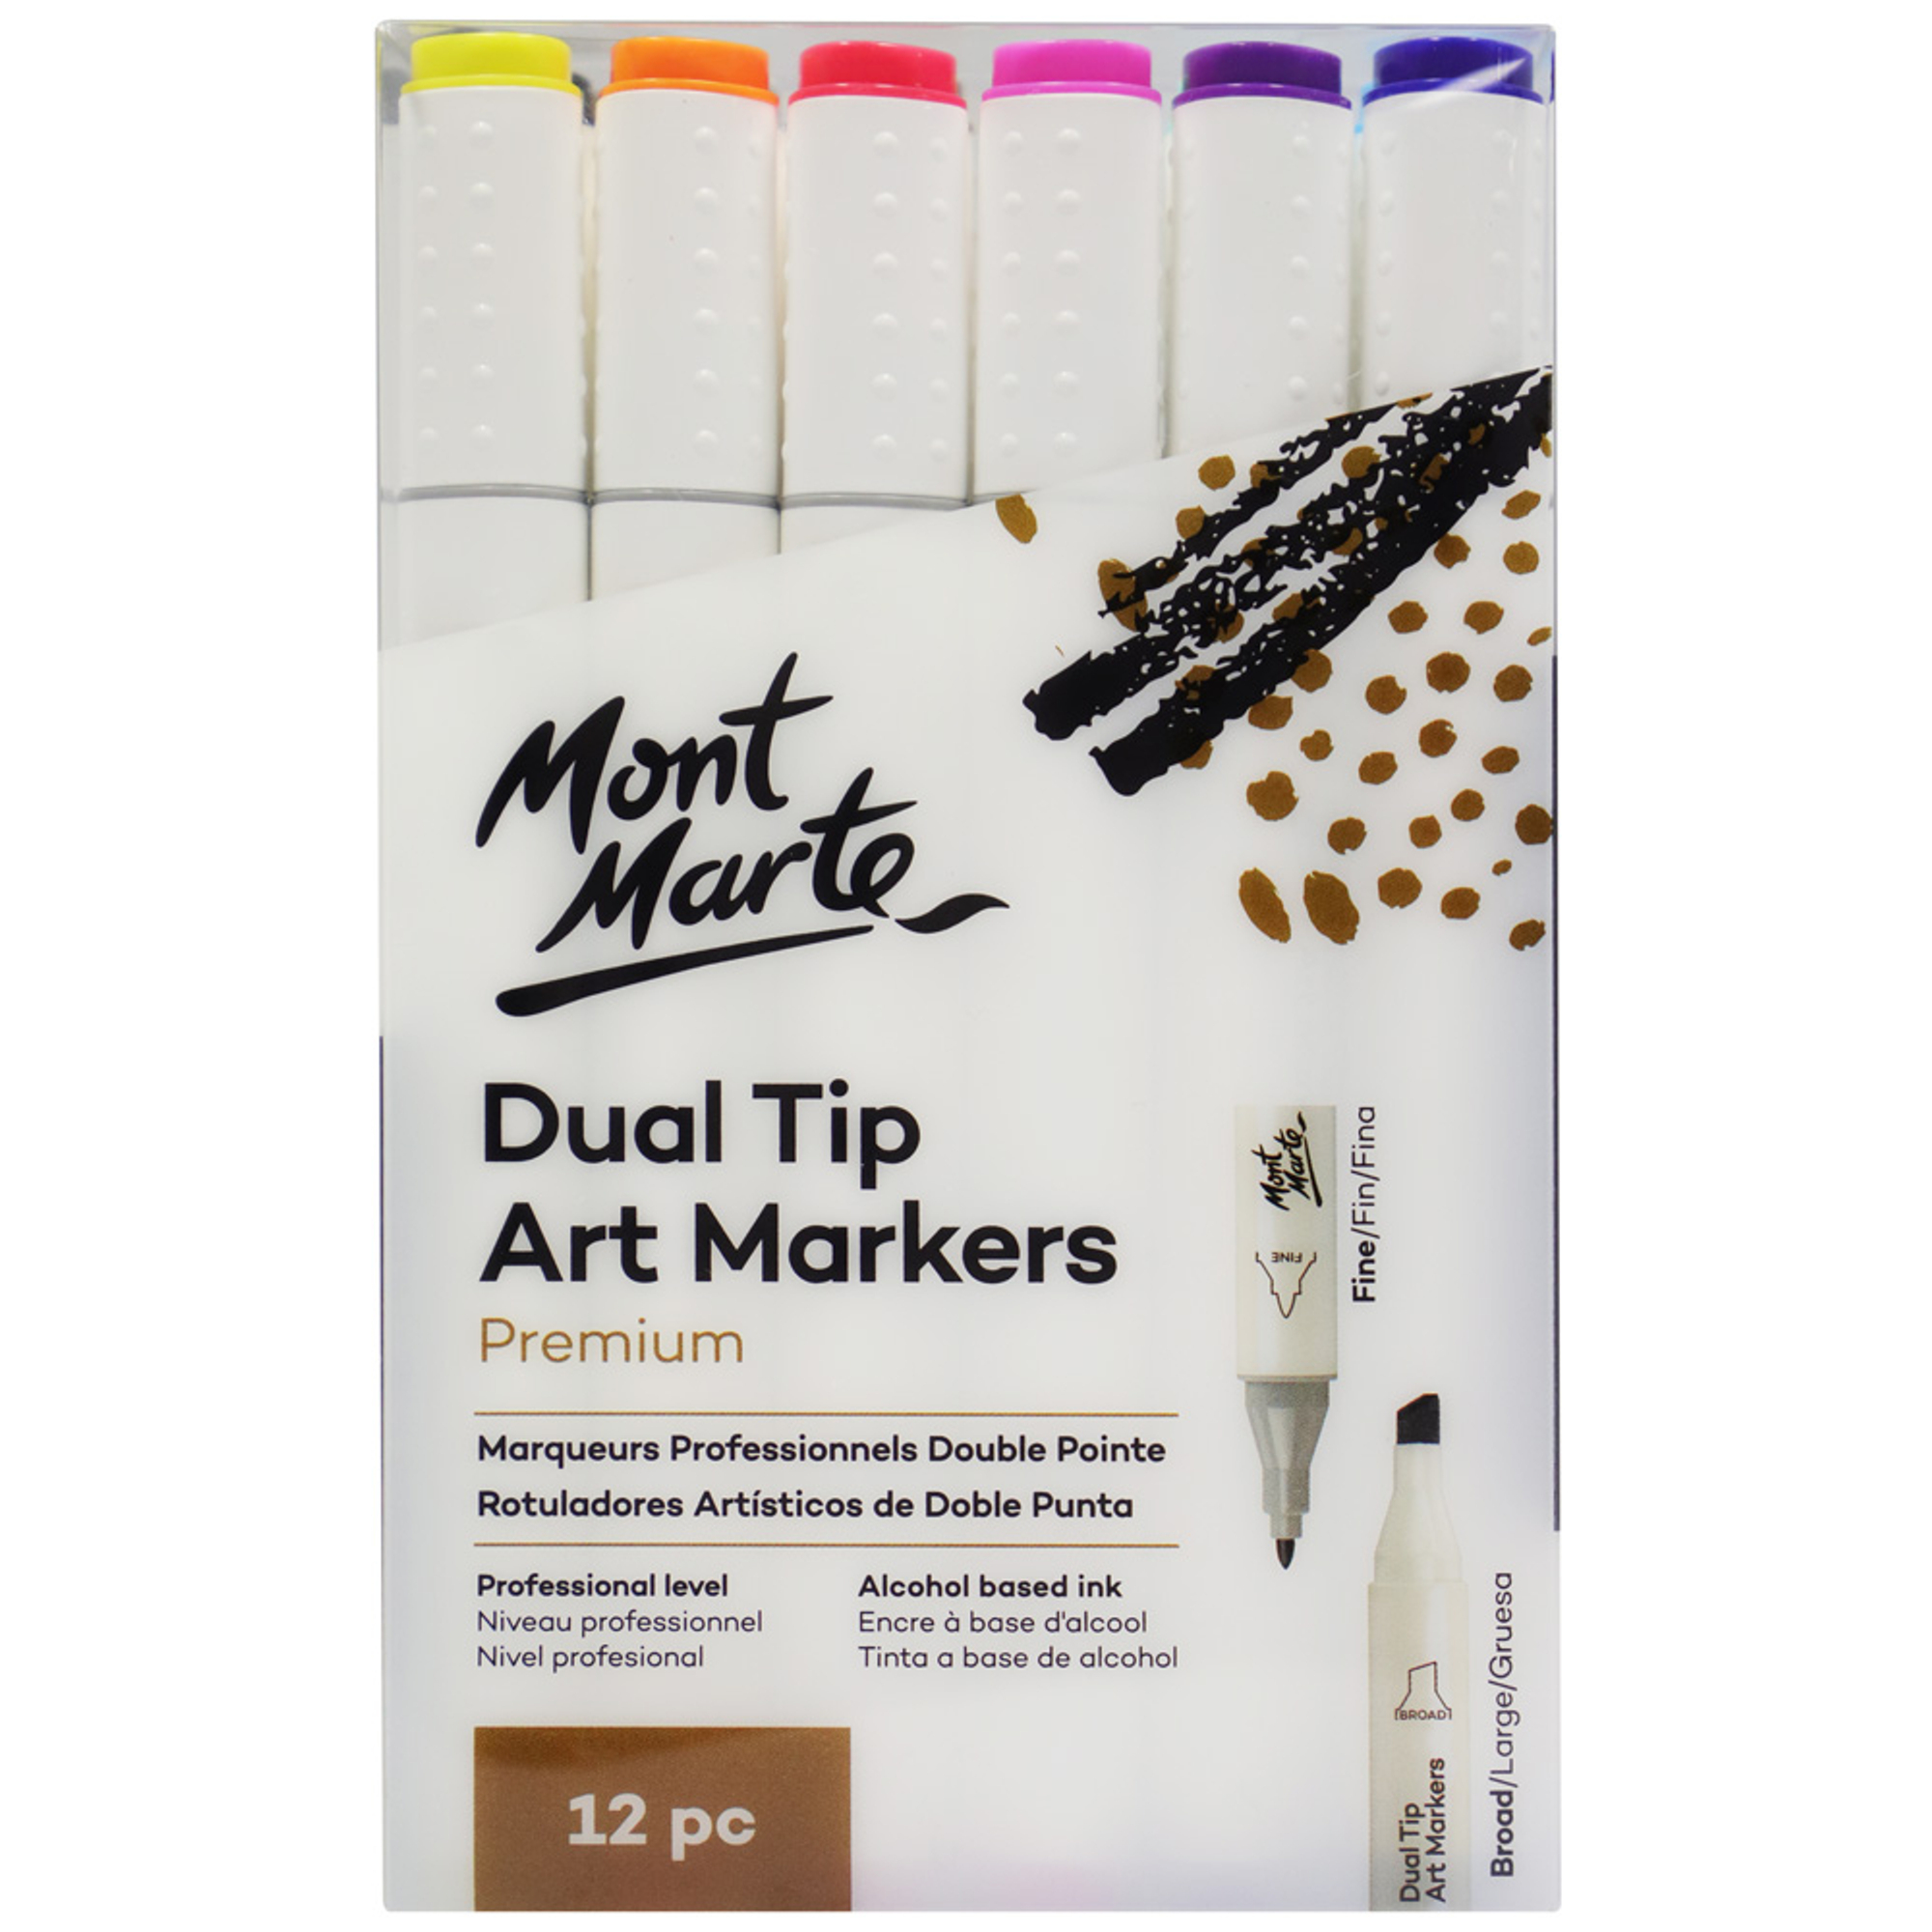 Bộ Bút Lông Cao Cấp 2 Đầu Mont Marte 12/24 màu - Dual Tip Art Markers Premium